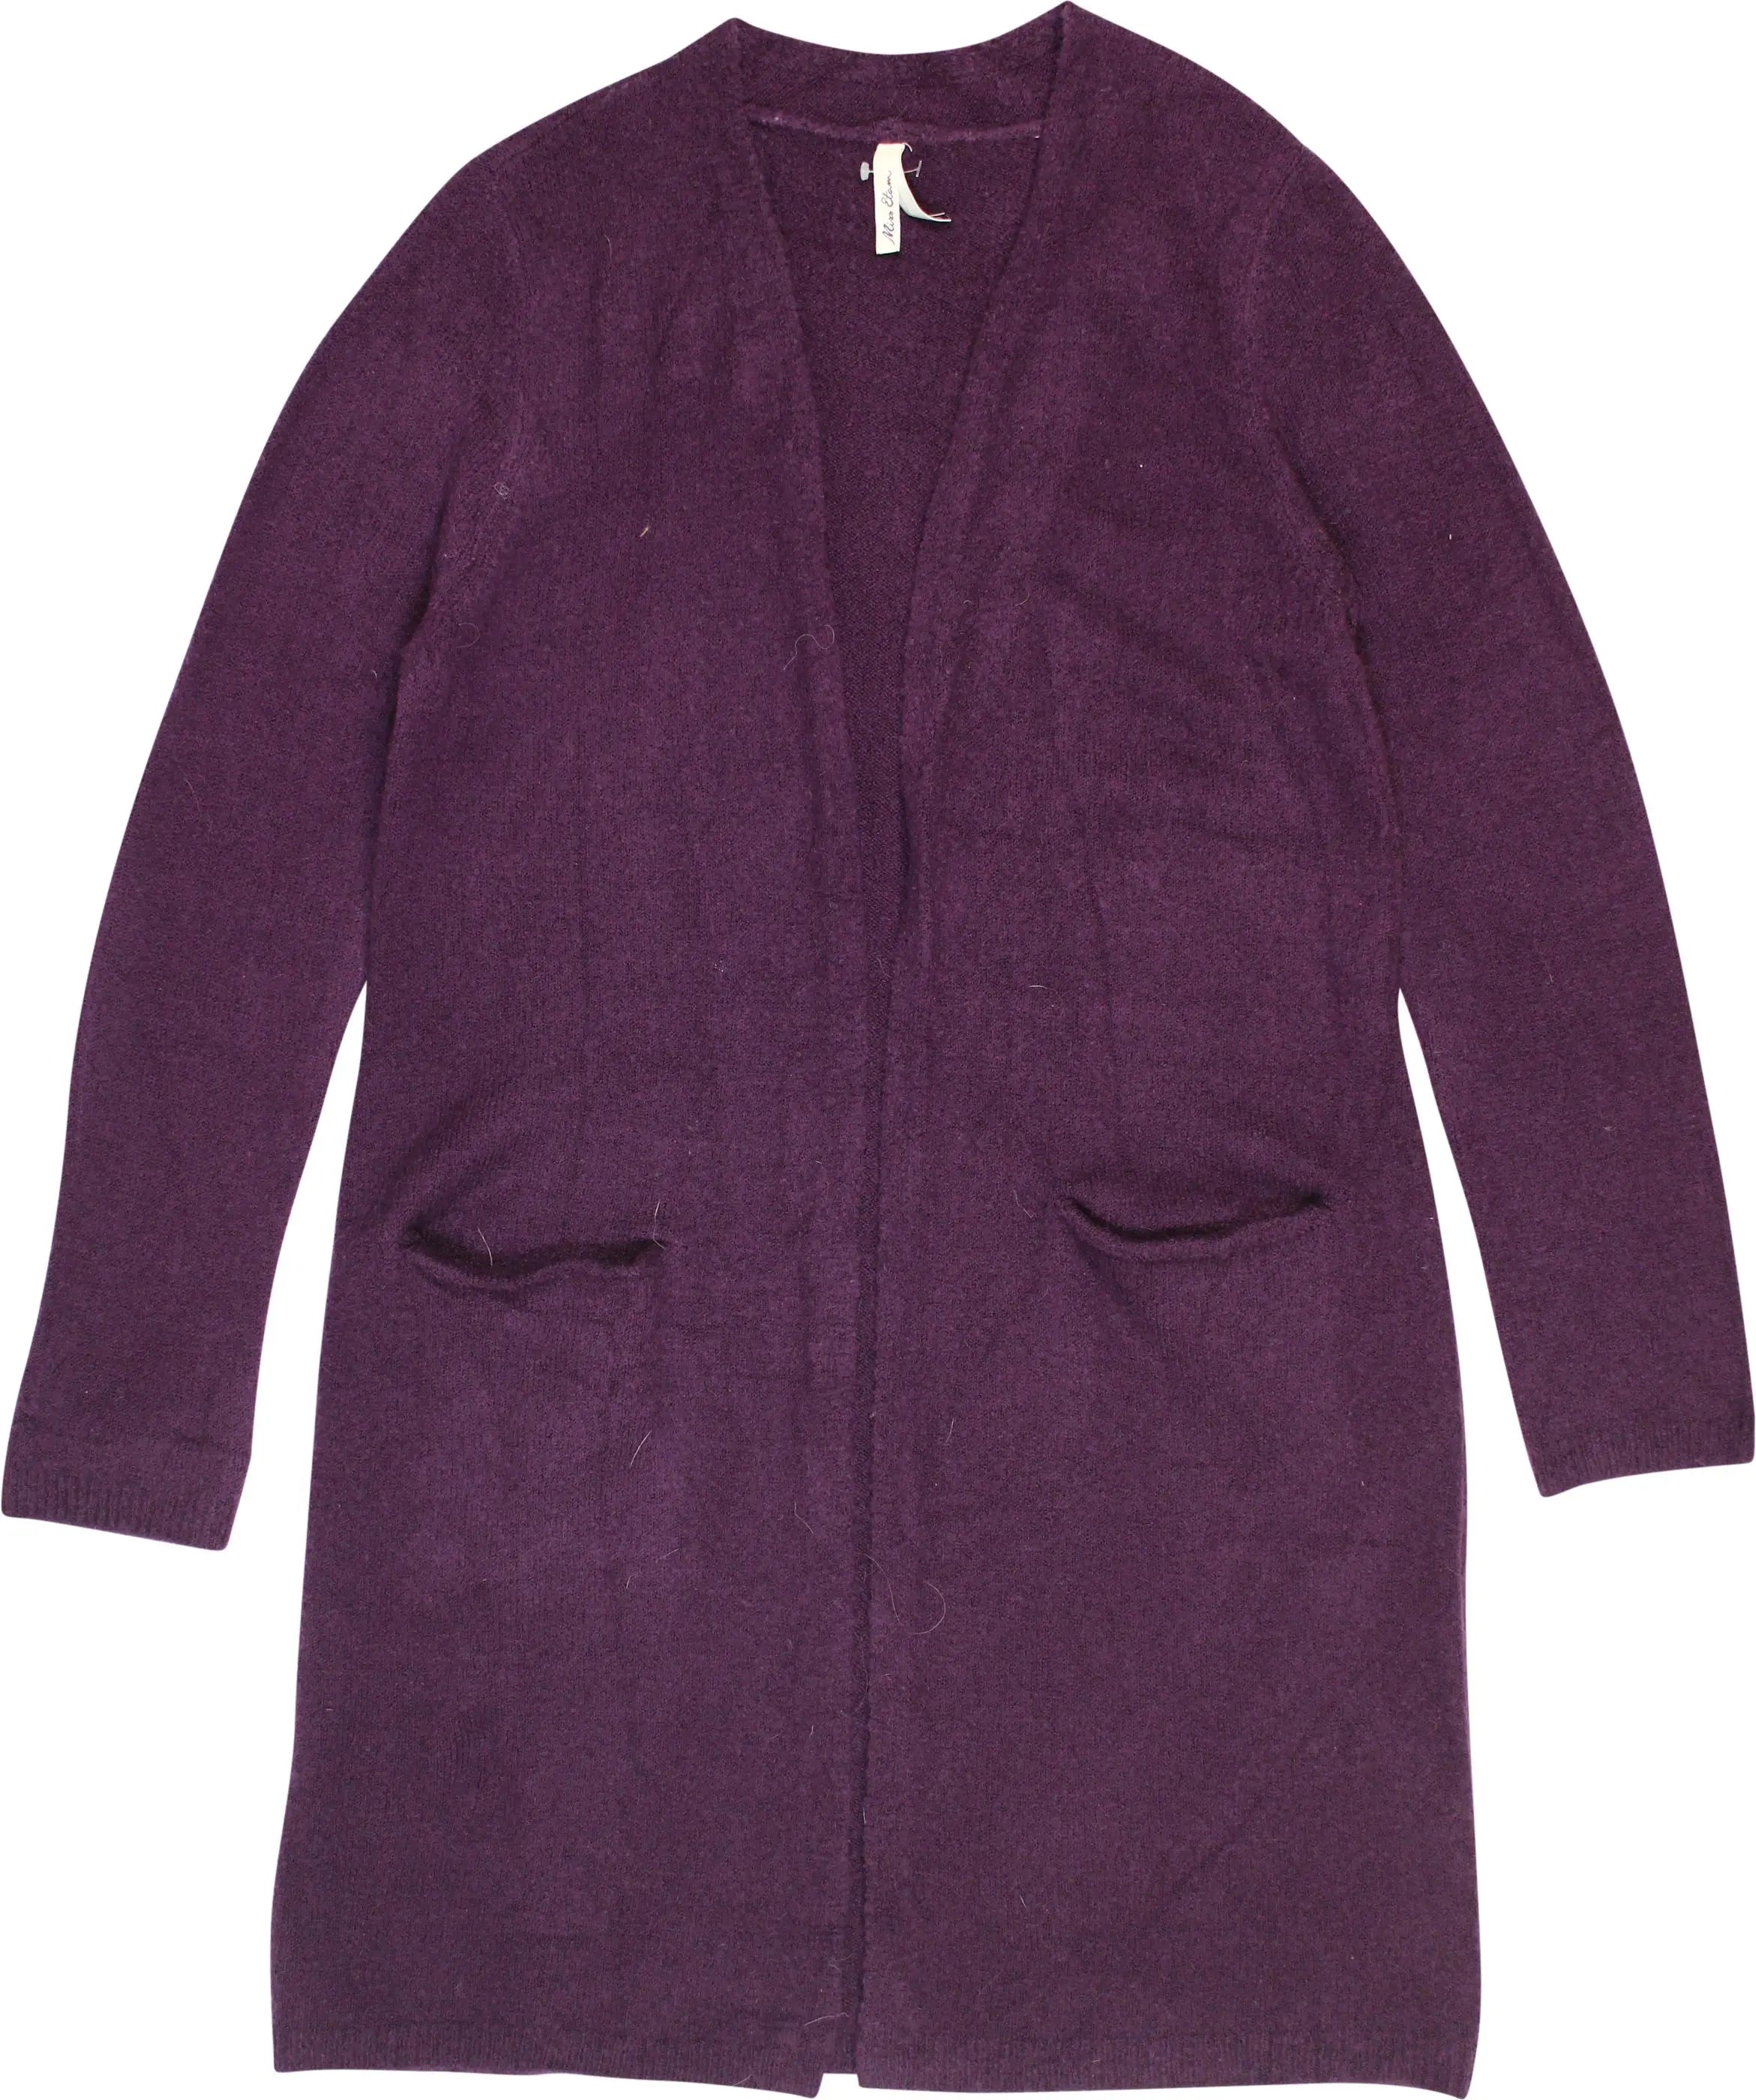 Miss Etam - Purple Long Cardigan- ThriftTale.com - Vintage and second handclothing